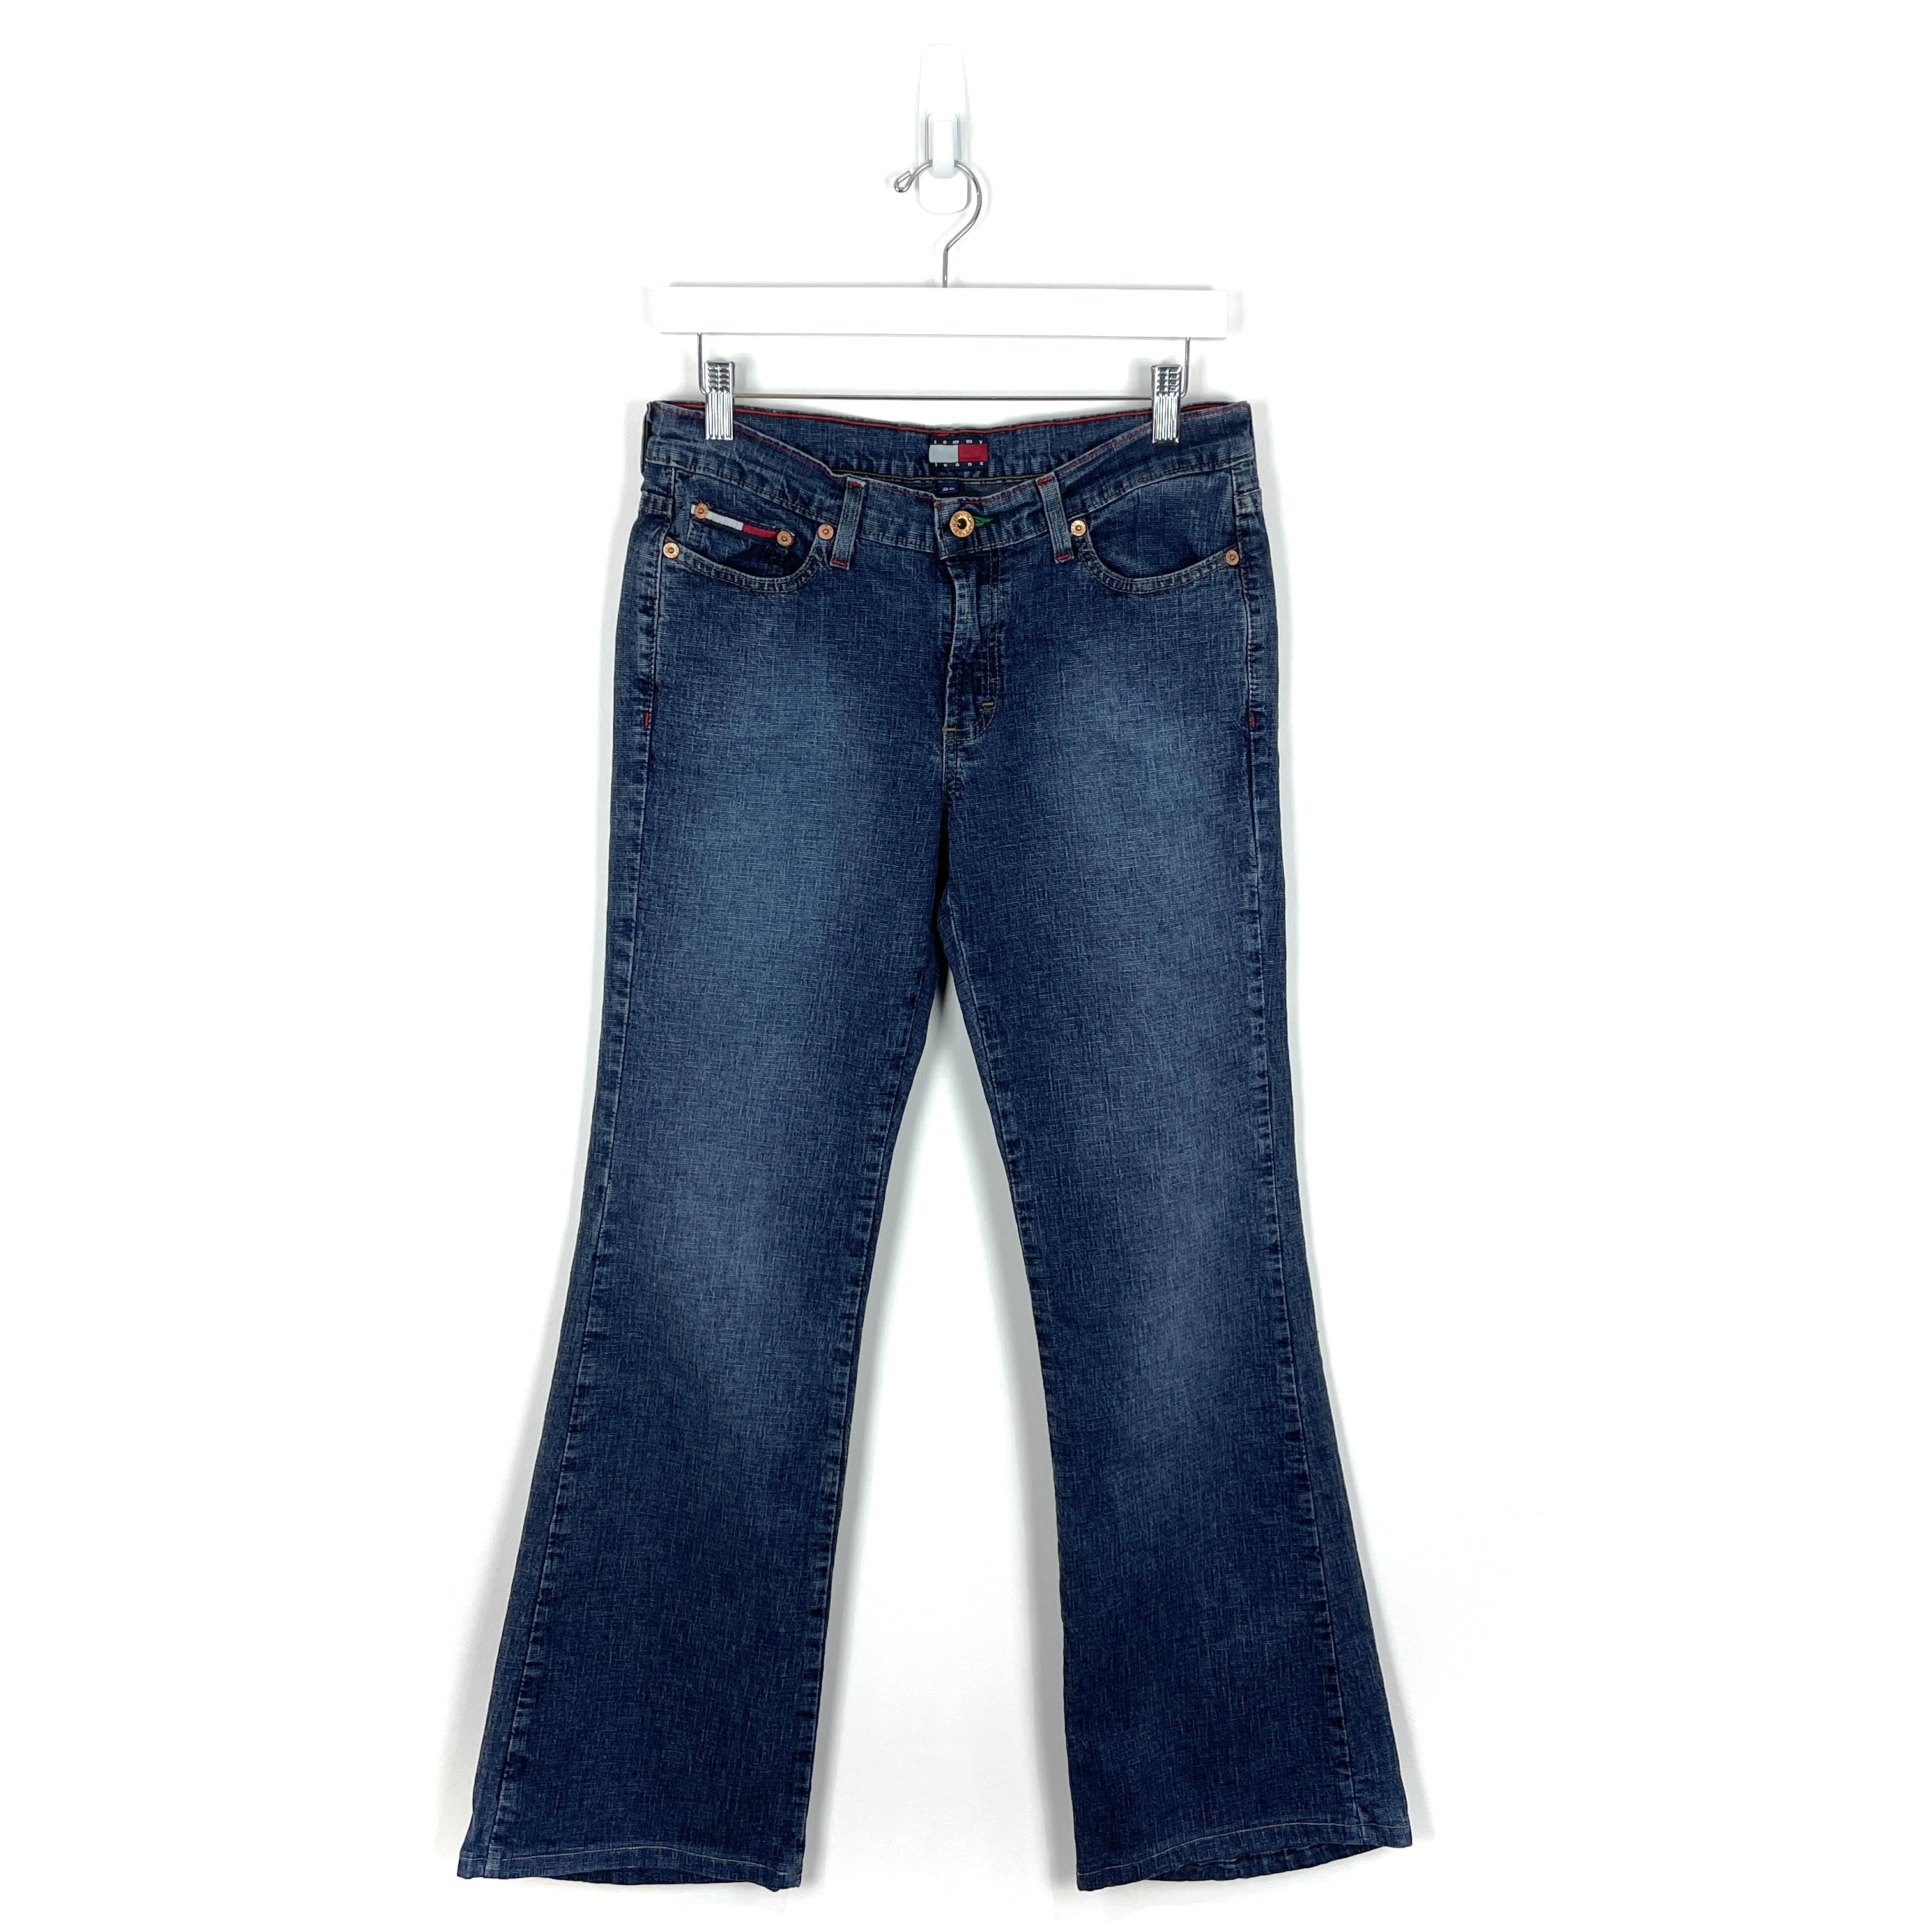 Vintage Tommy Hilfiger Jeans - Women's 30/29